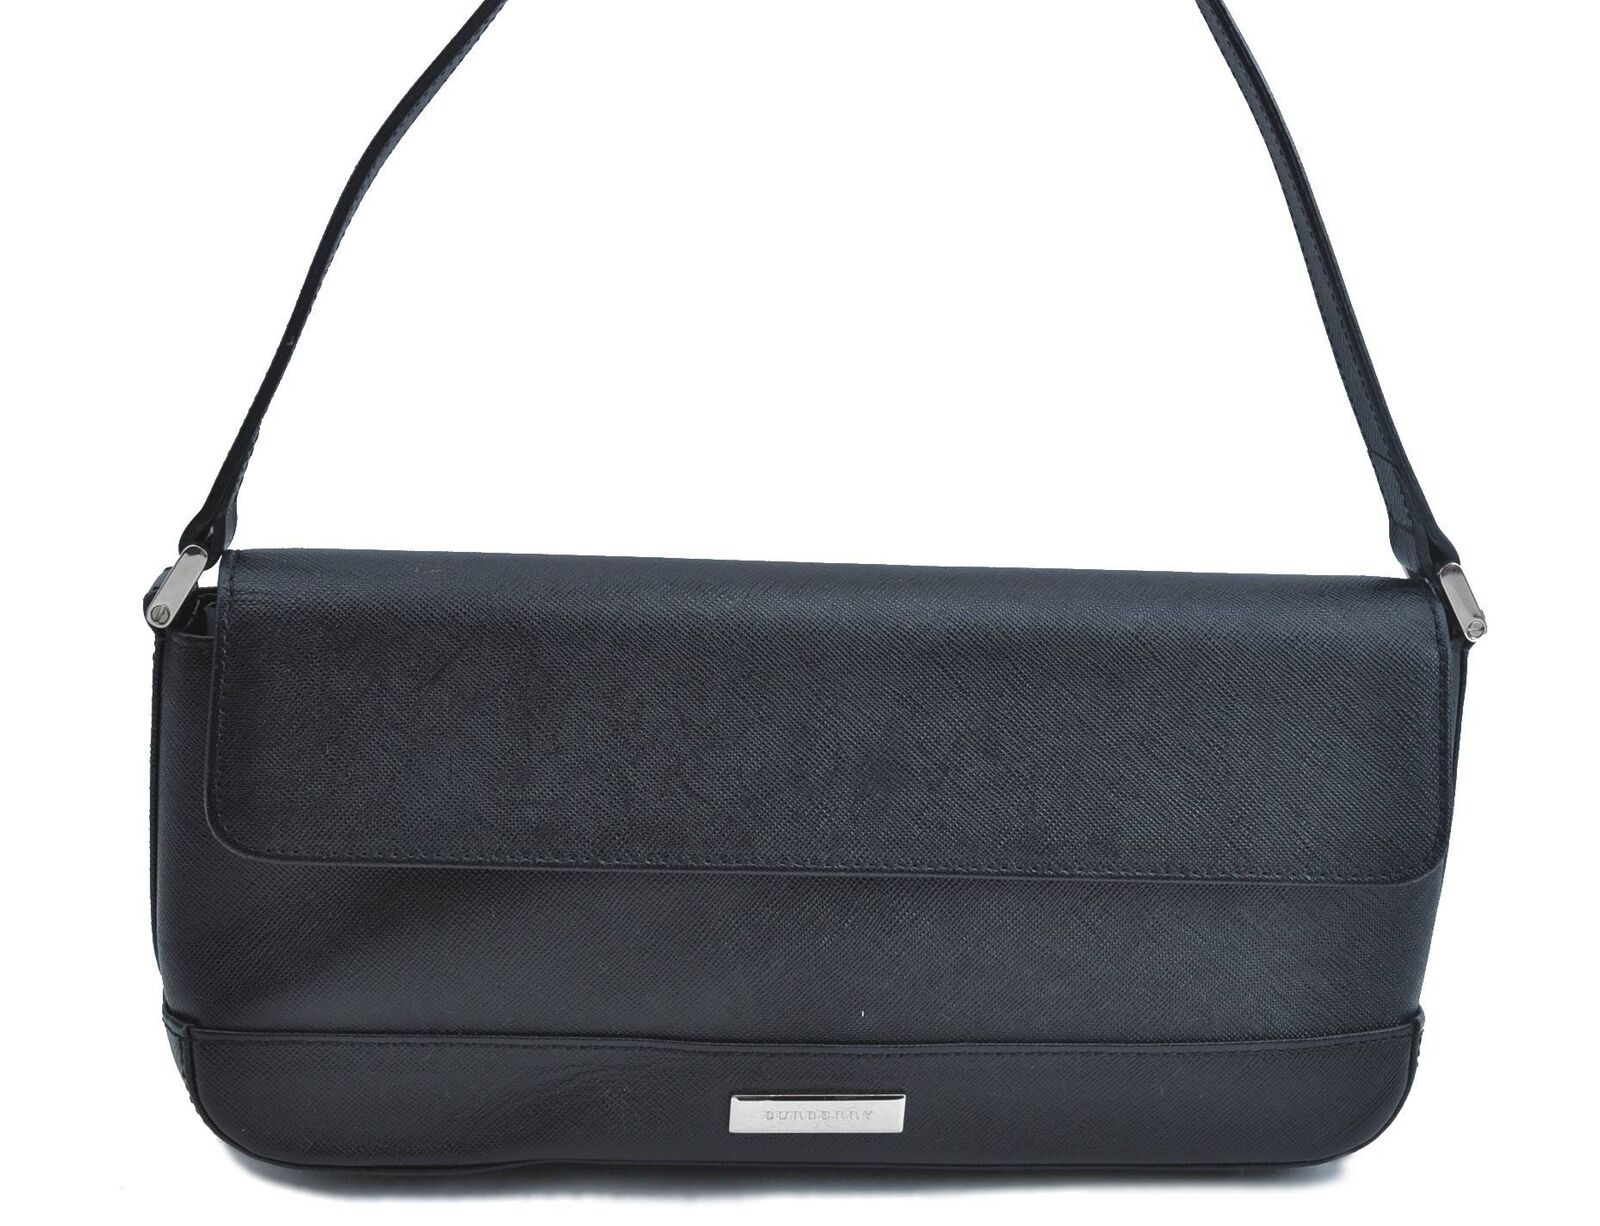 Authentic BURBERRY Shoulder Hand Bag Purse Leather Black H0952